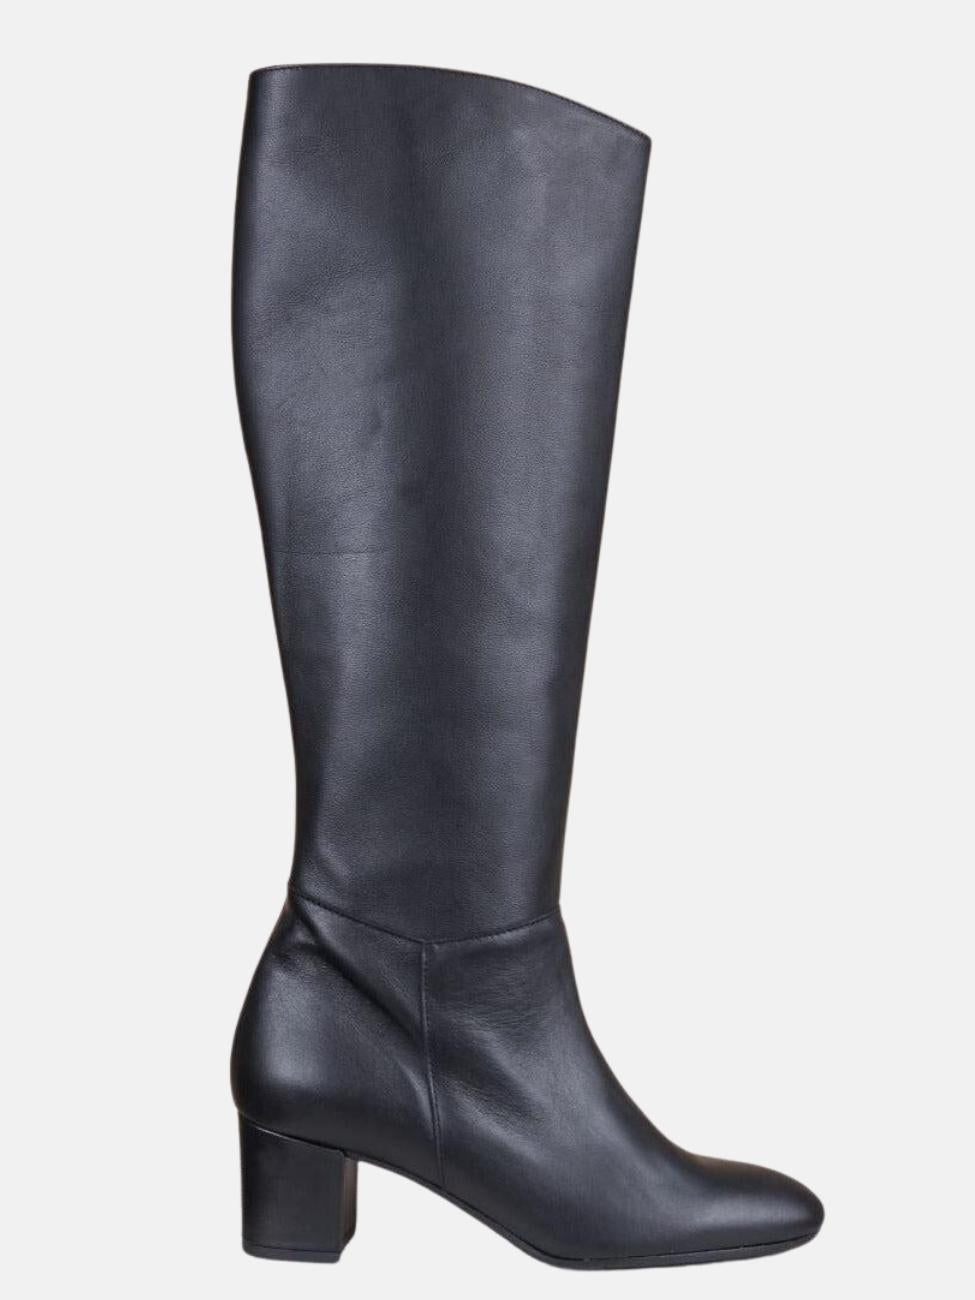 Forli Boot in Black Calf Leather